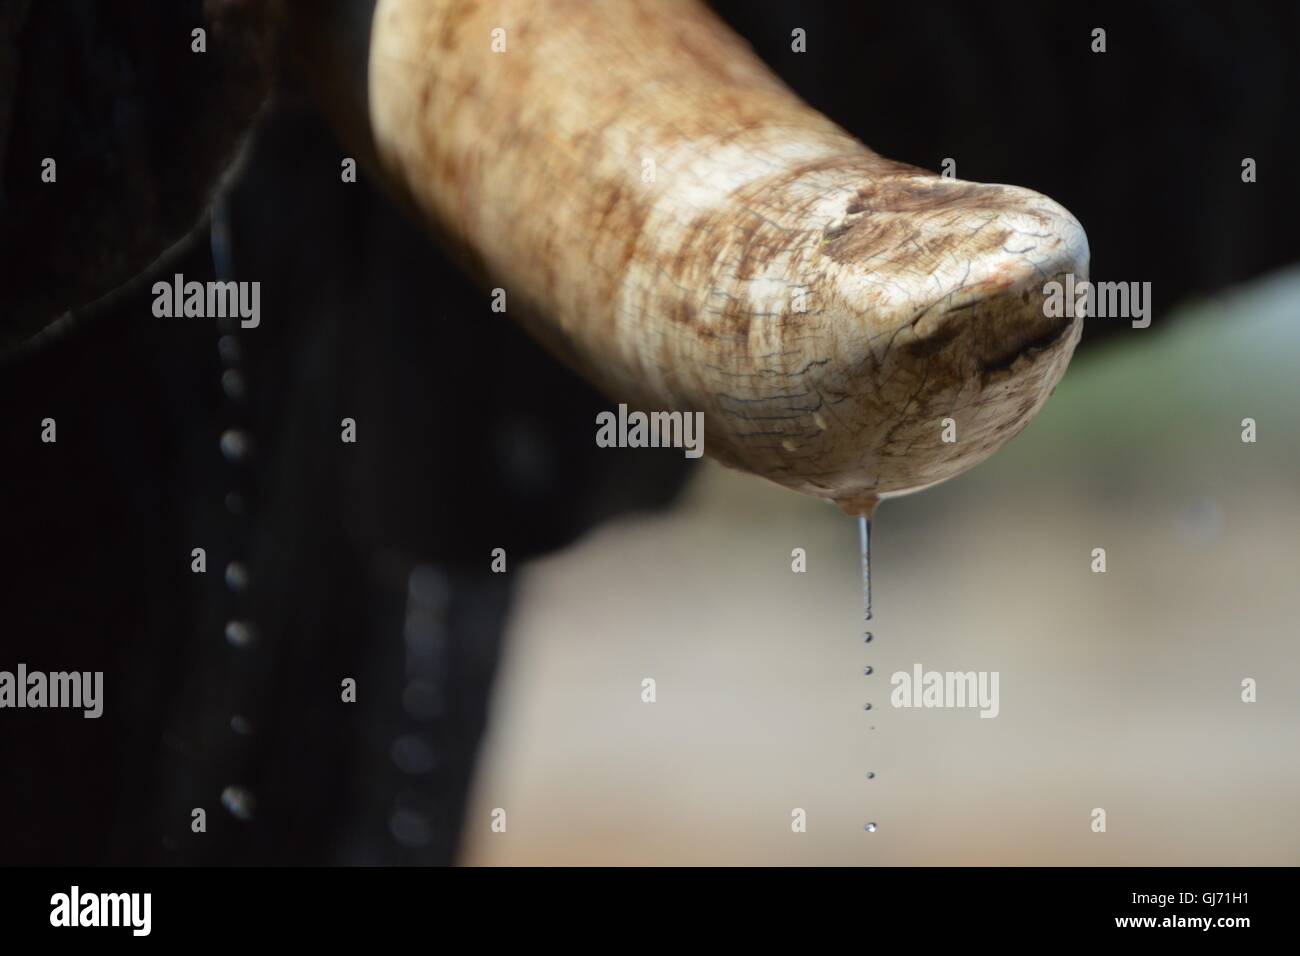 Hautnah am Elephant Tusk mit Wasser an. Stockfoto